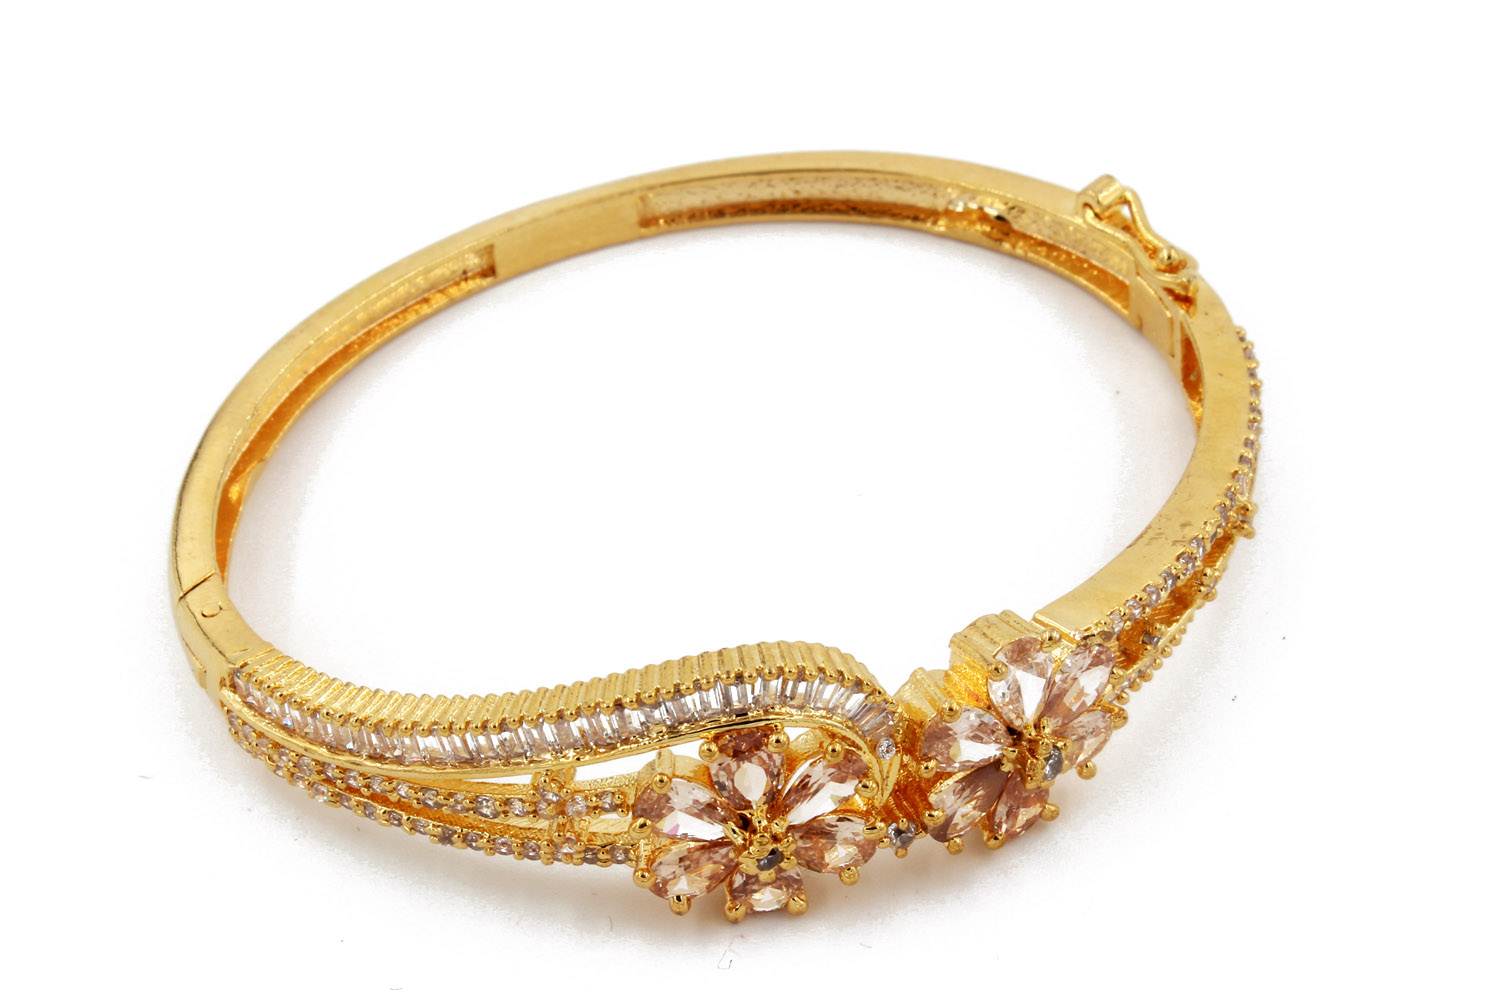 Preziamo Gold Plated Floral Contemporary AD Bracelet